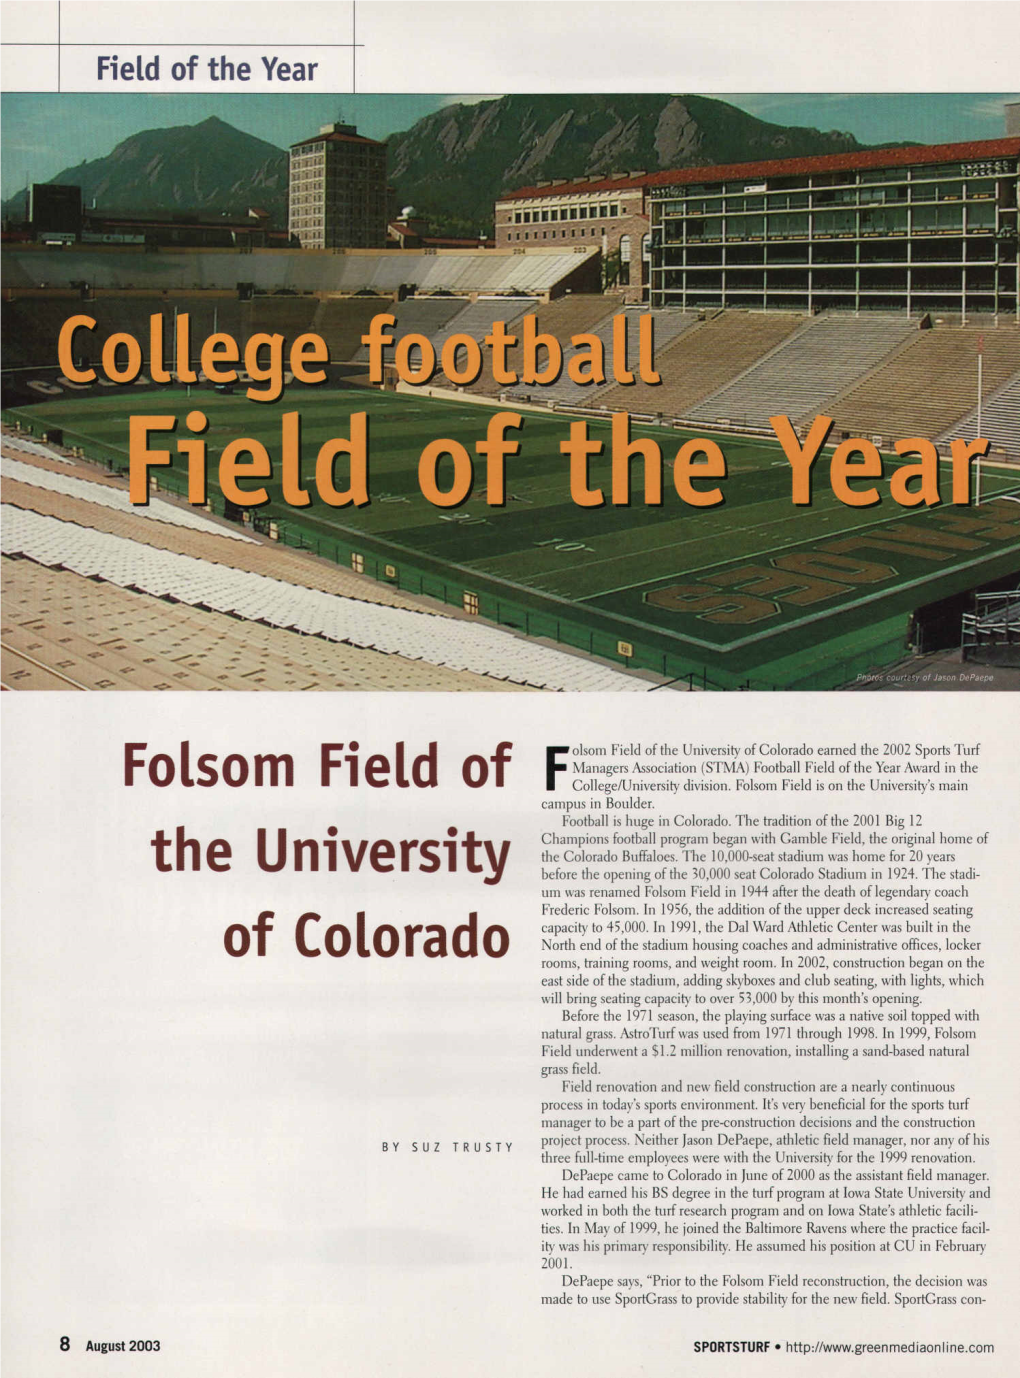 Folsom Field of the University of Colorado